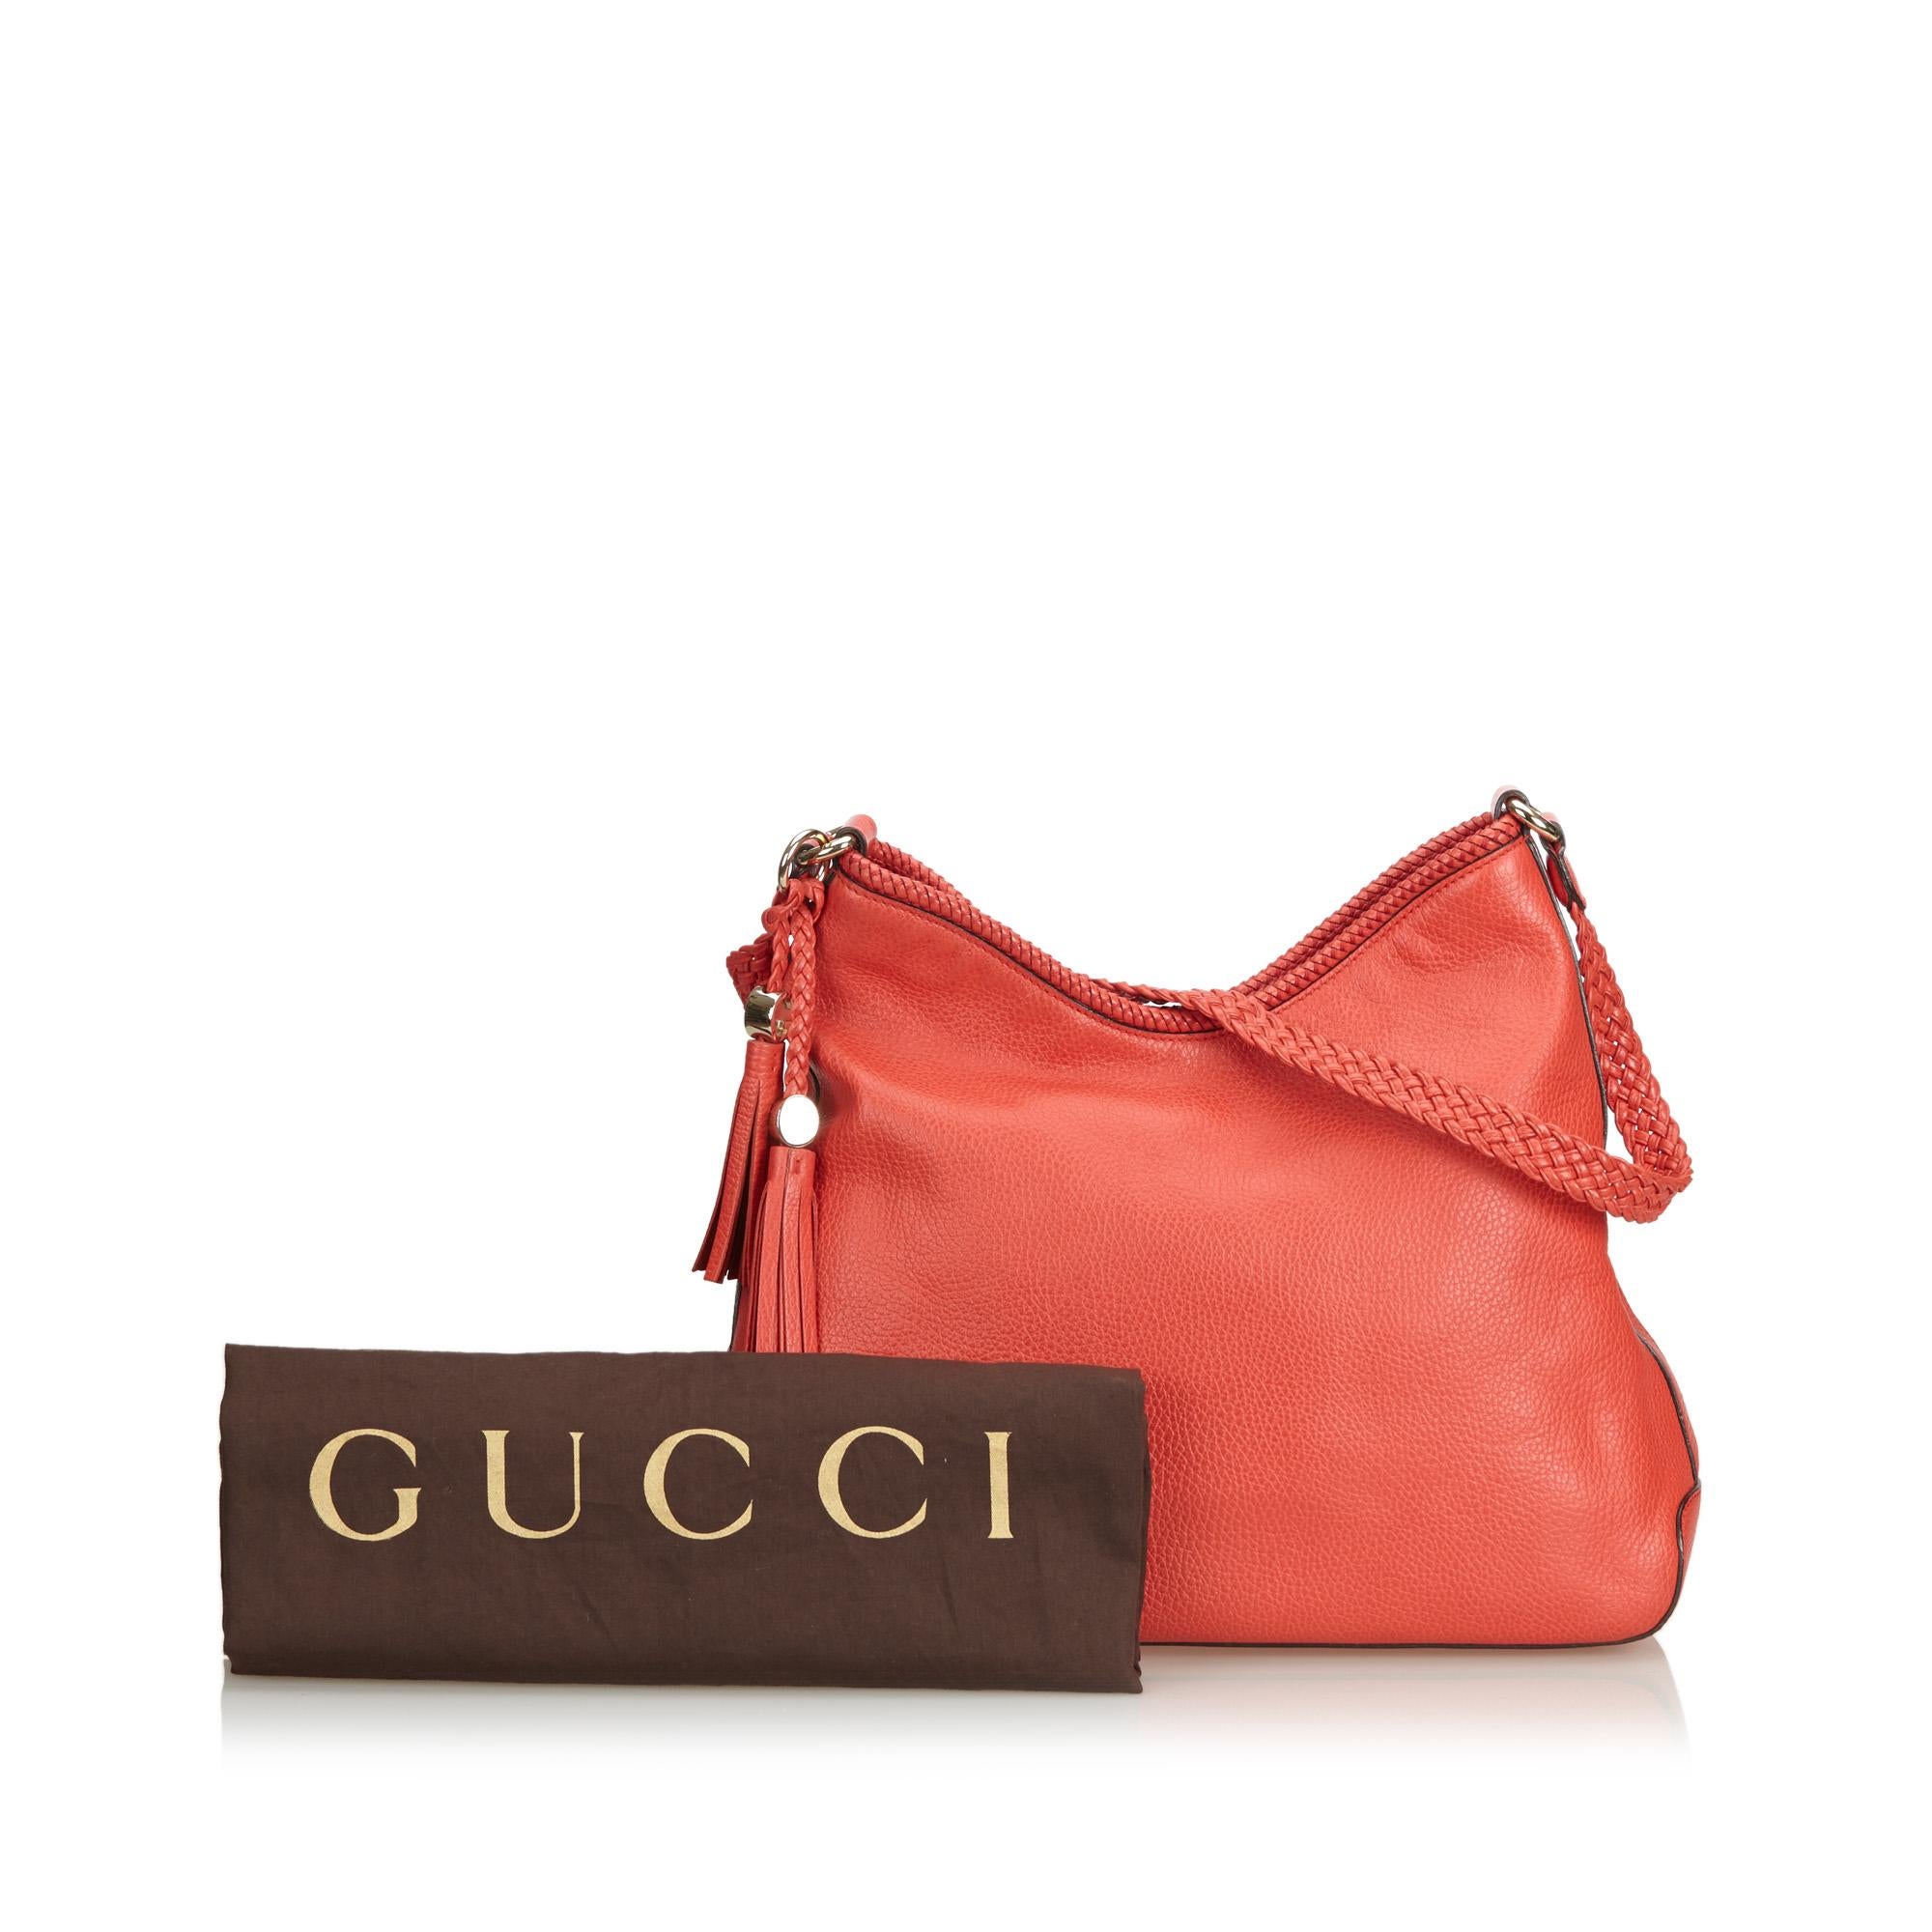 Gucci Red Leather Marrakech Shoulder Bag For Sale 6